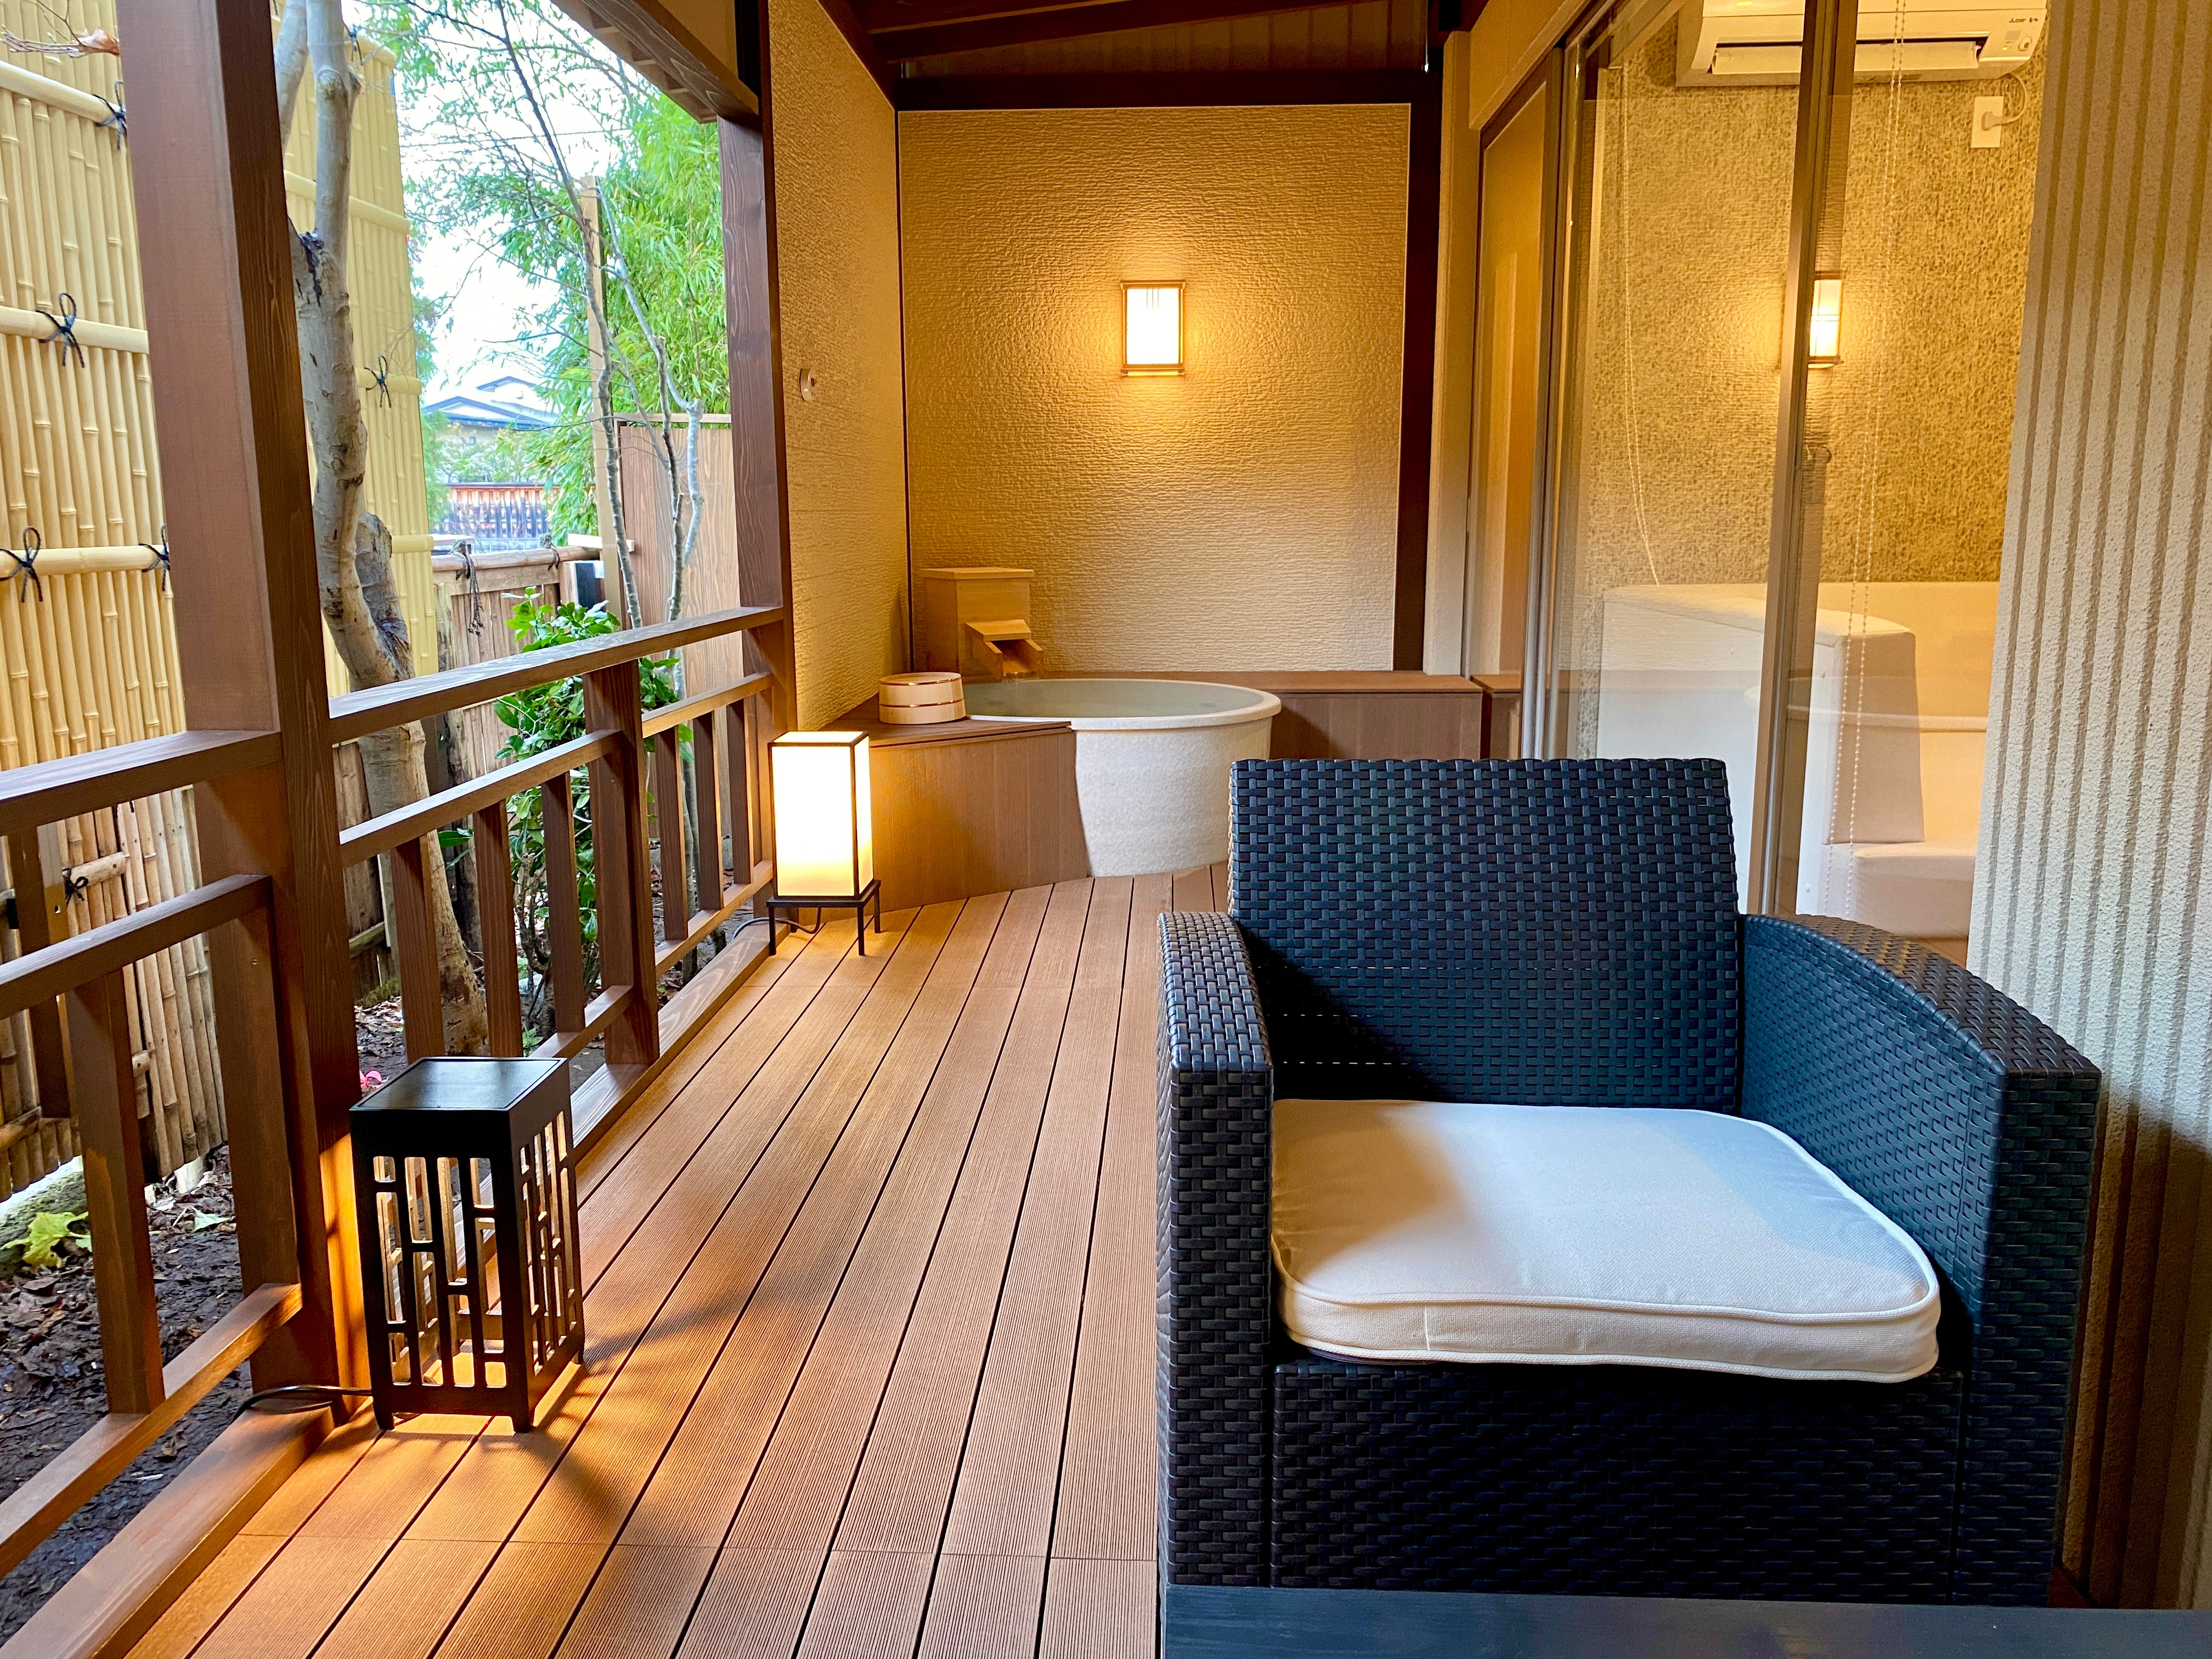 Kamar tidur modern Jepang dengan kamar mandi terbuka dan ruang makan